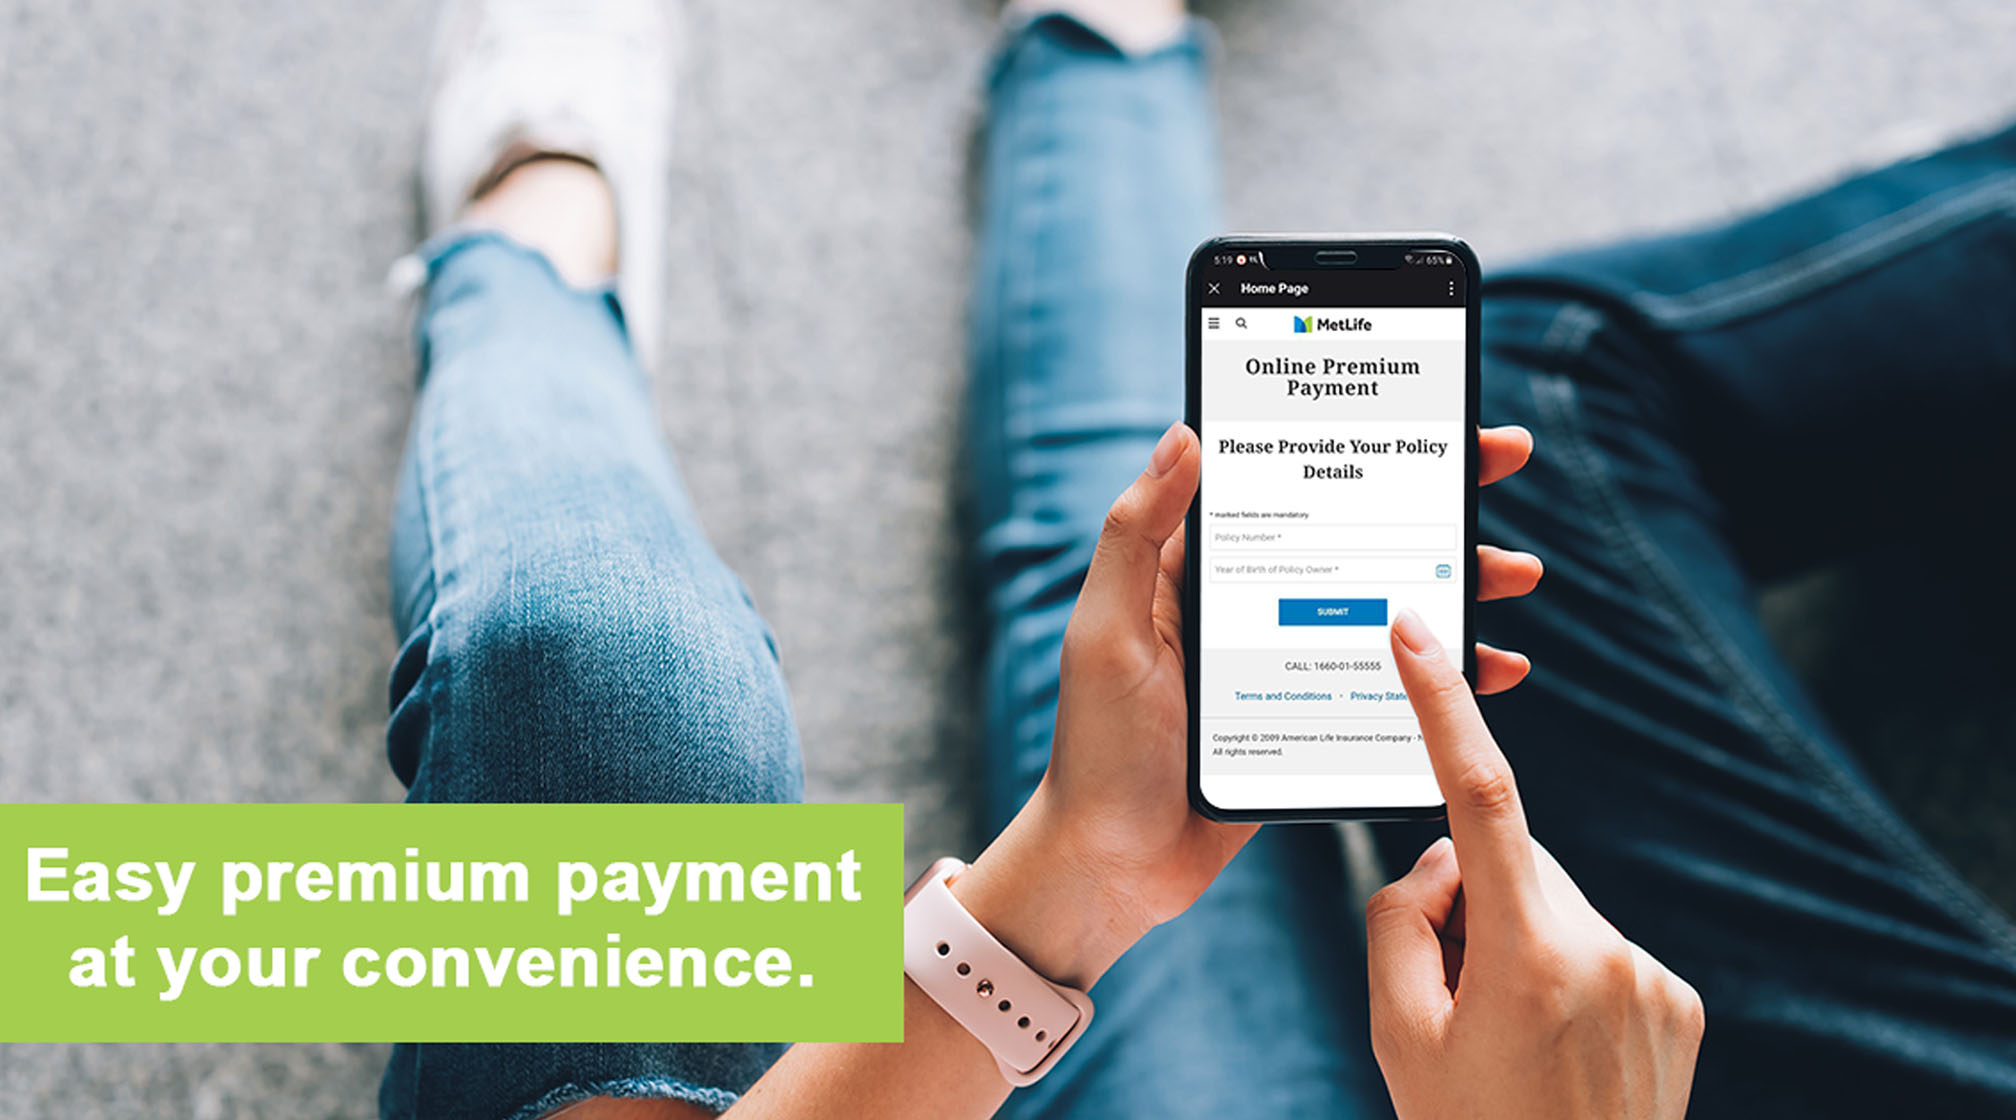 Online Premium Payment